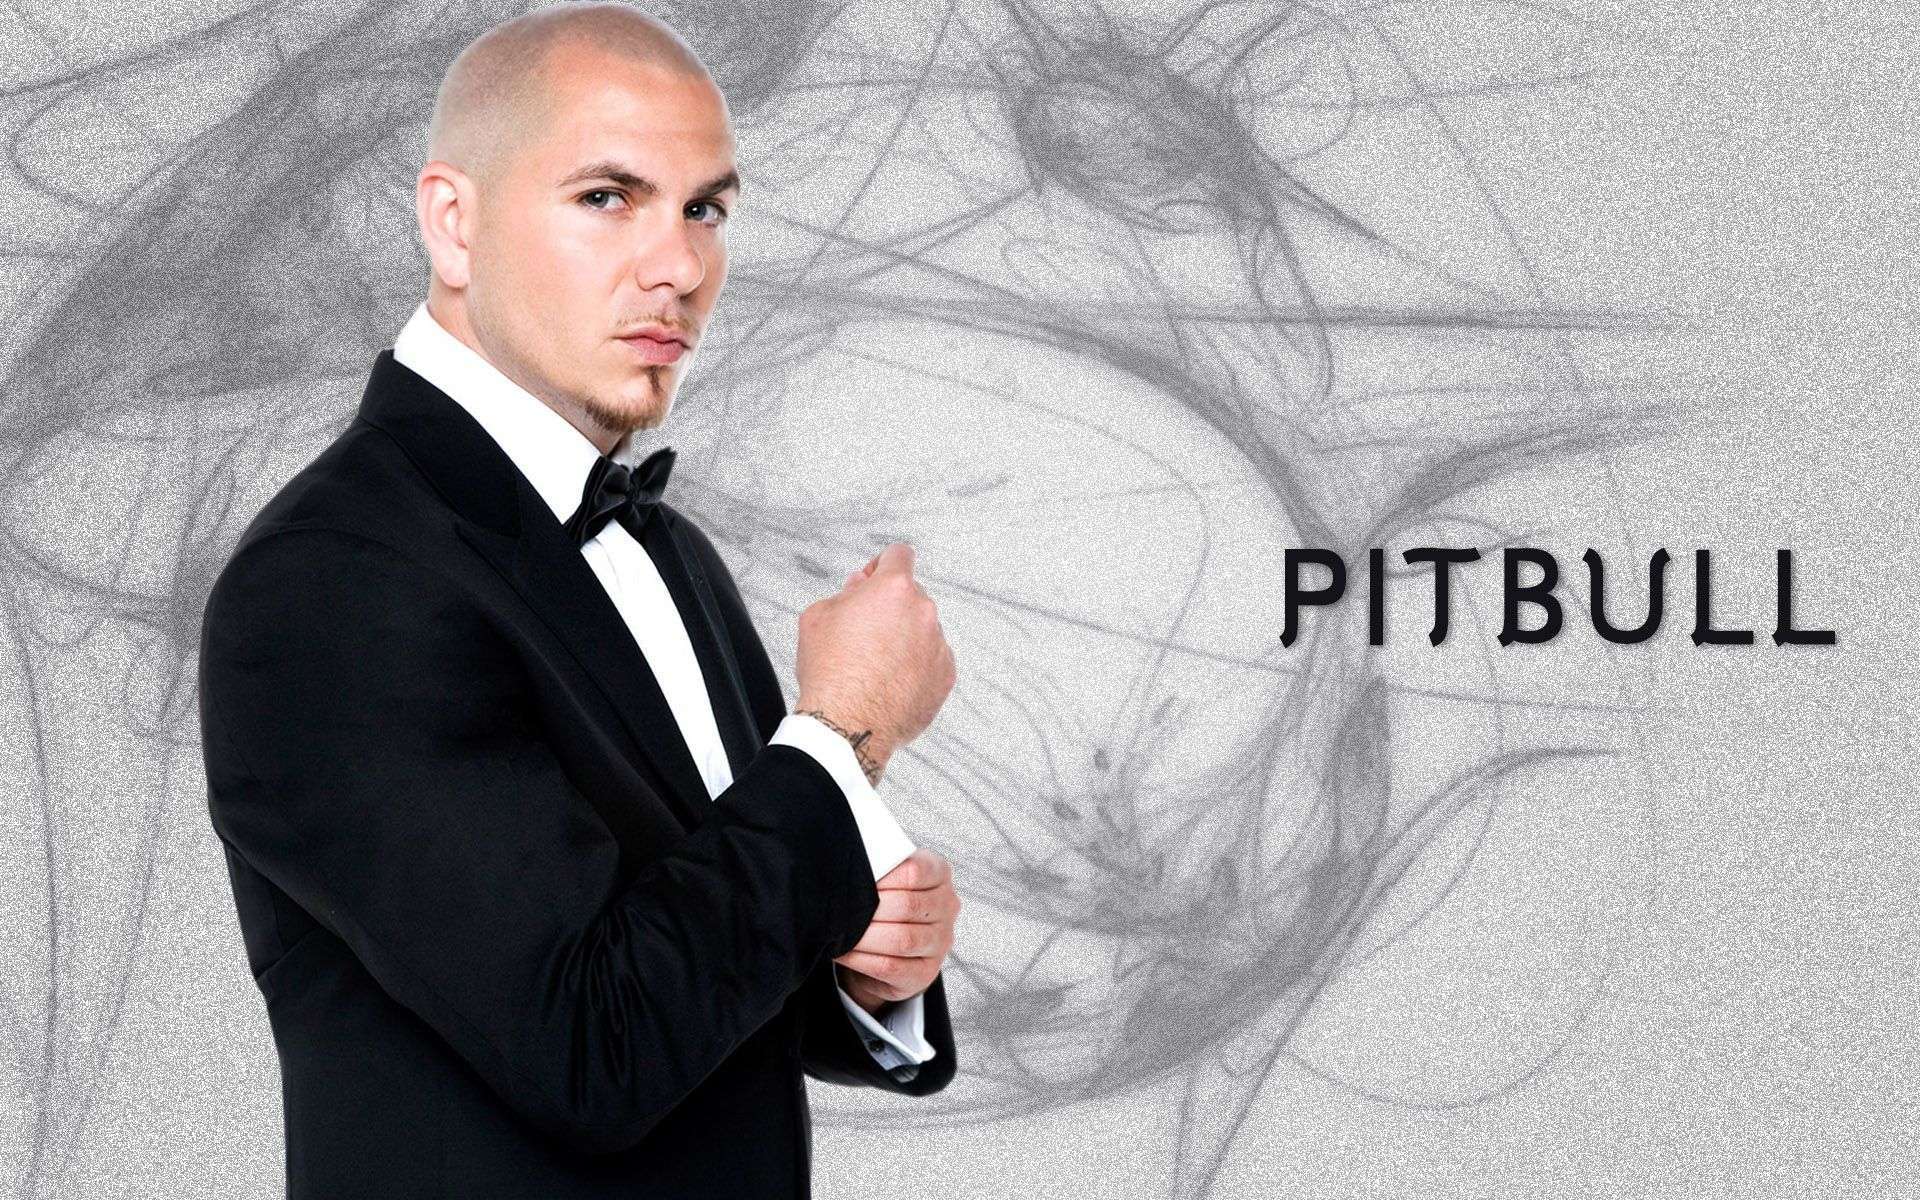 Pitbull Backgrounds